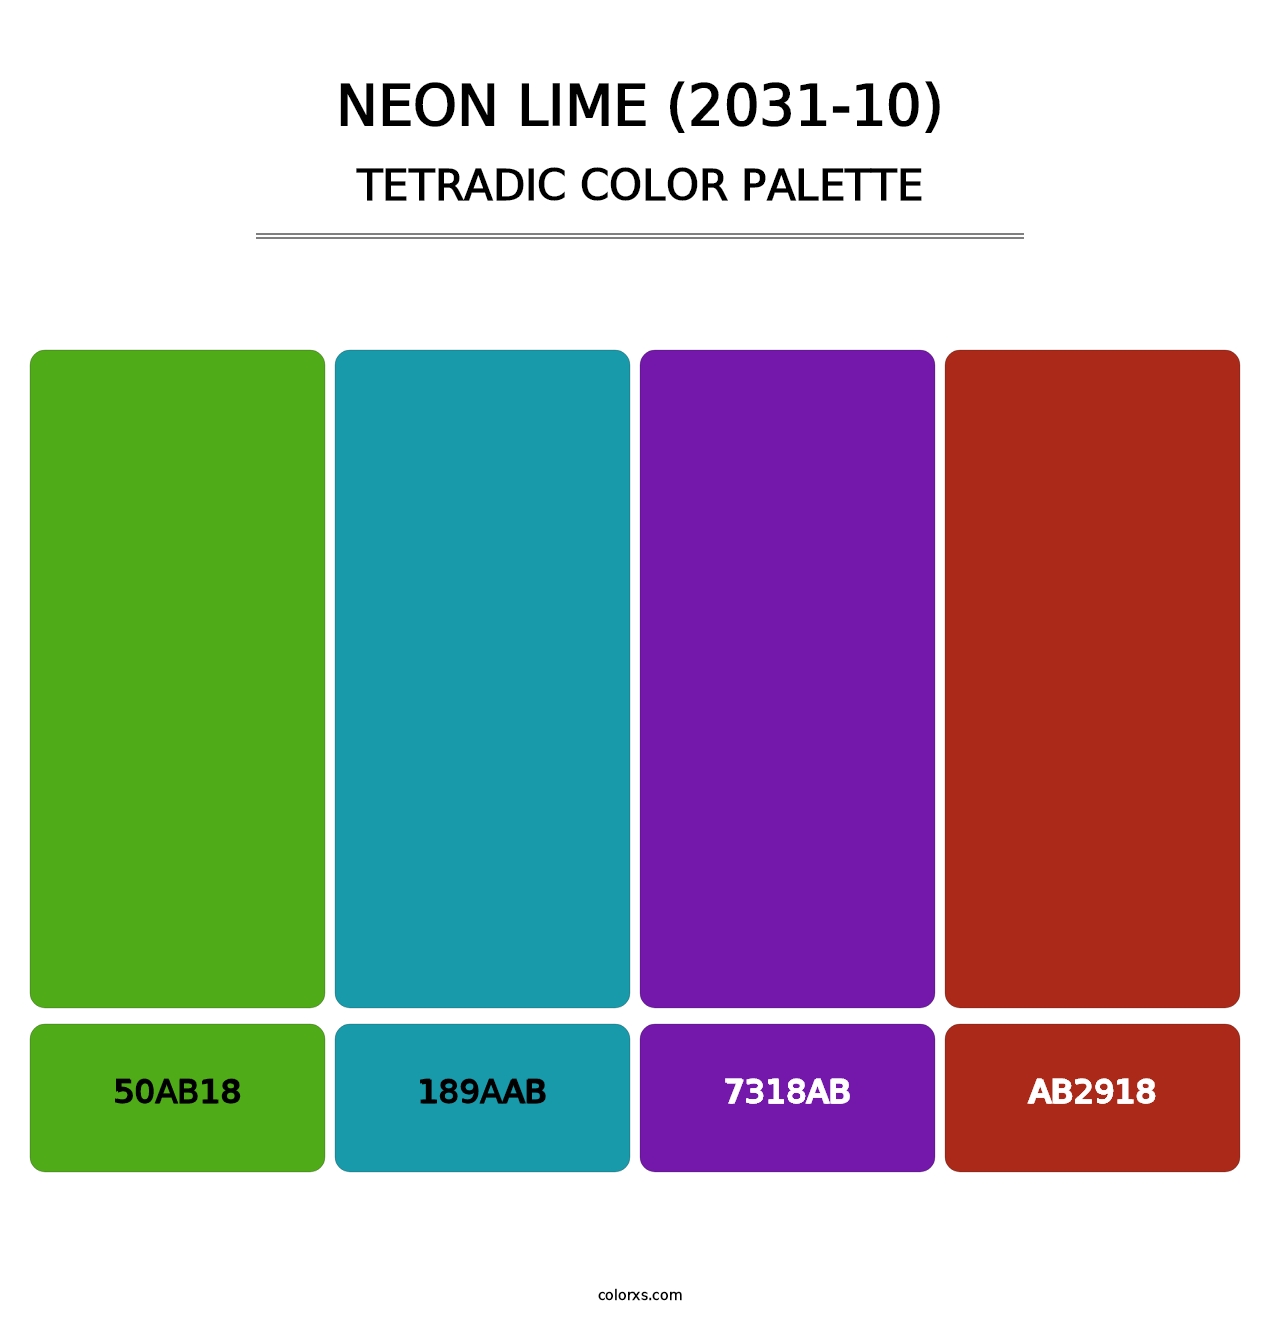 Neon Lime (2031-10) - Tetradic Color Palette